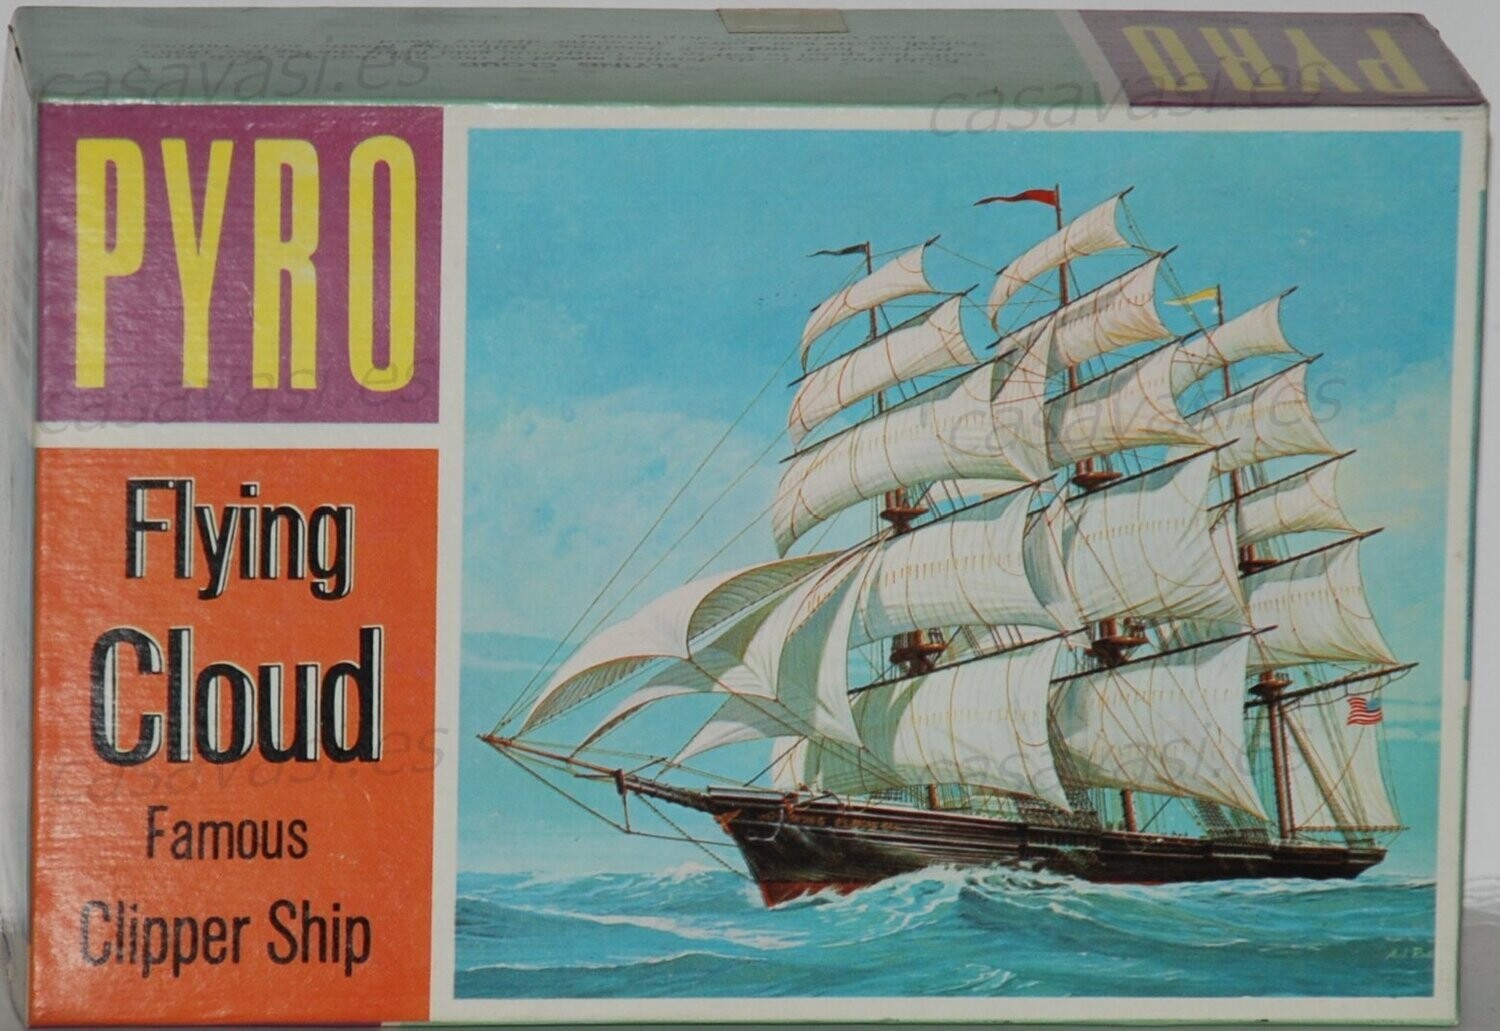 Pyro - c370-60 - Nº 10 - Flying Cloud - Famous Clipper Ship
Box Size 18.5 x 12 cm.